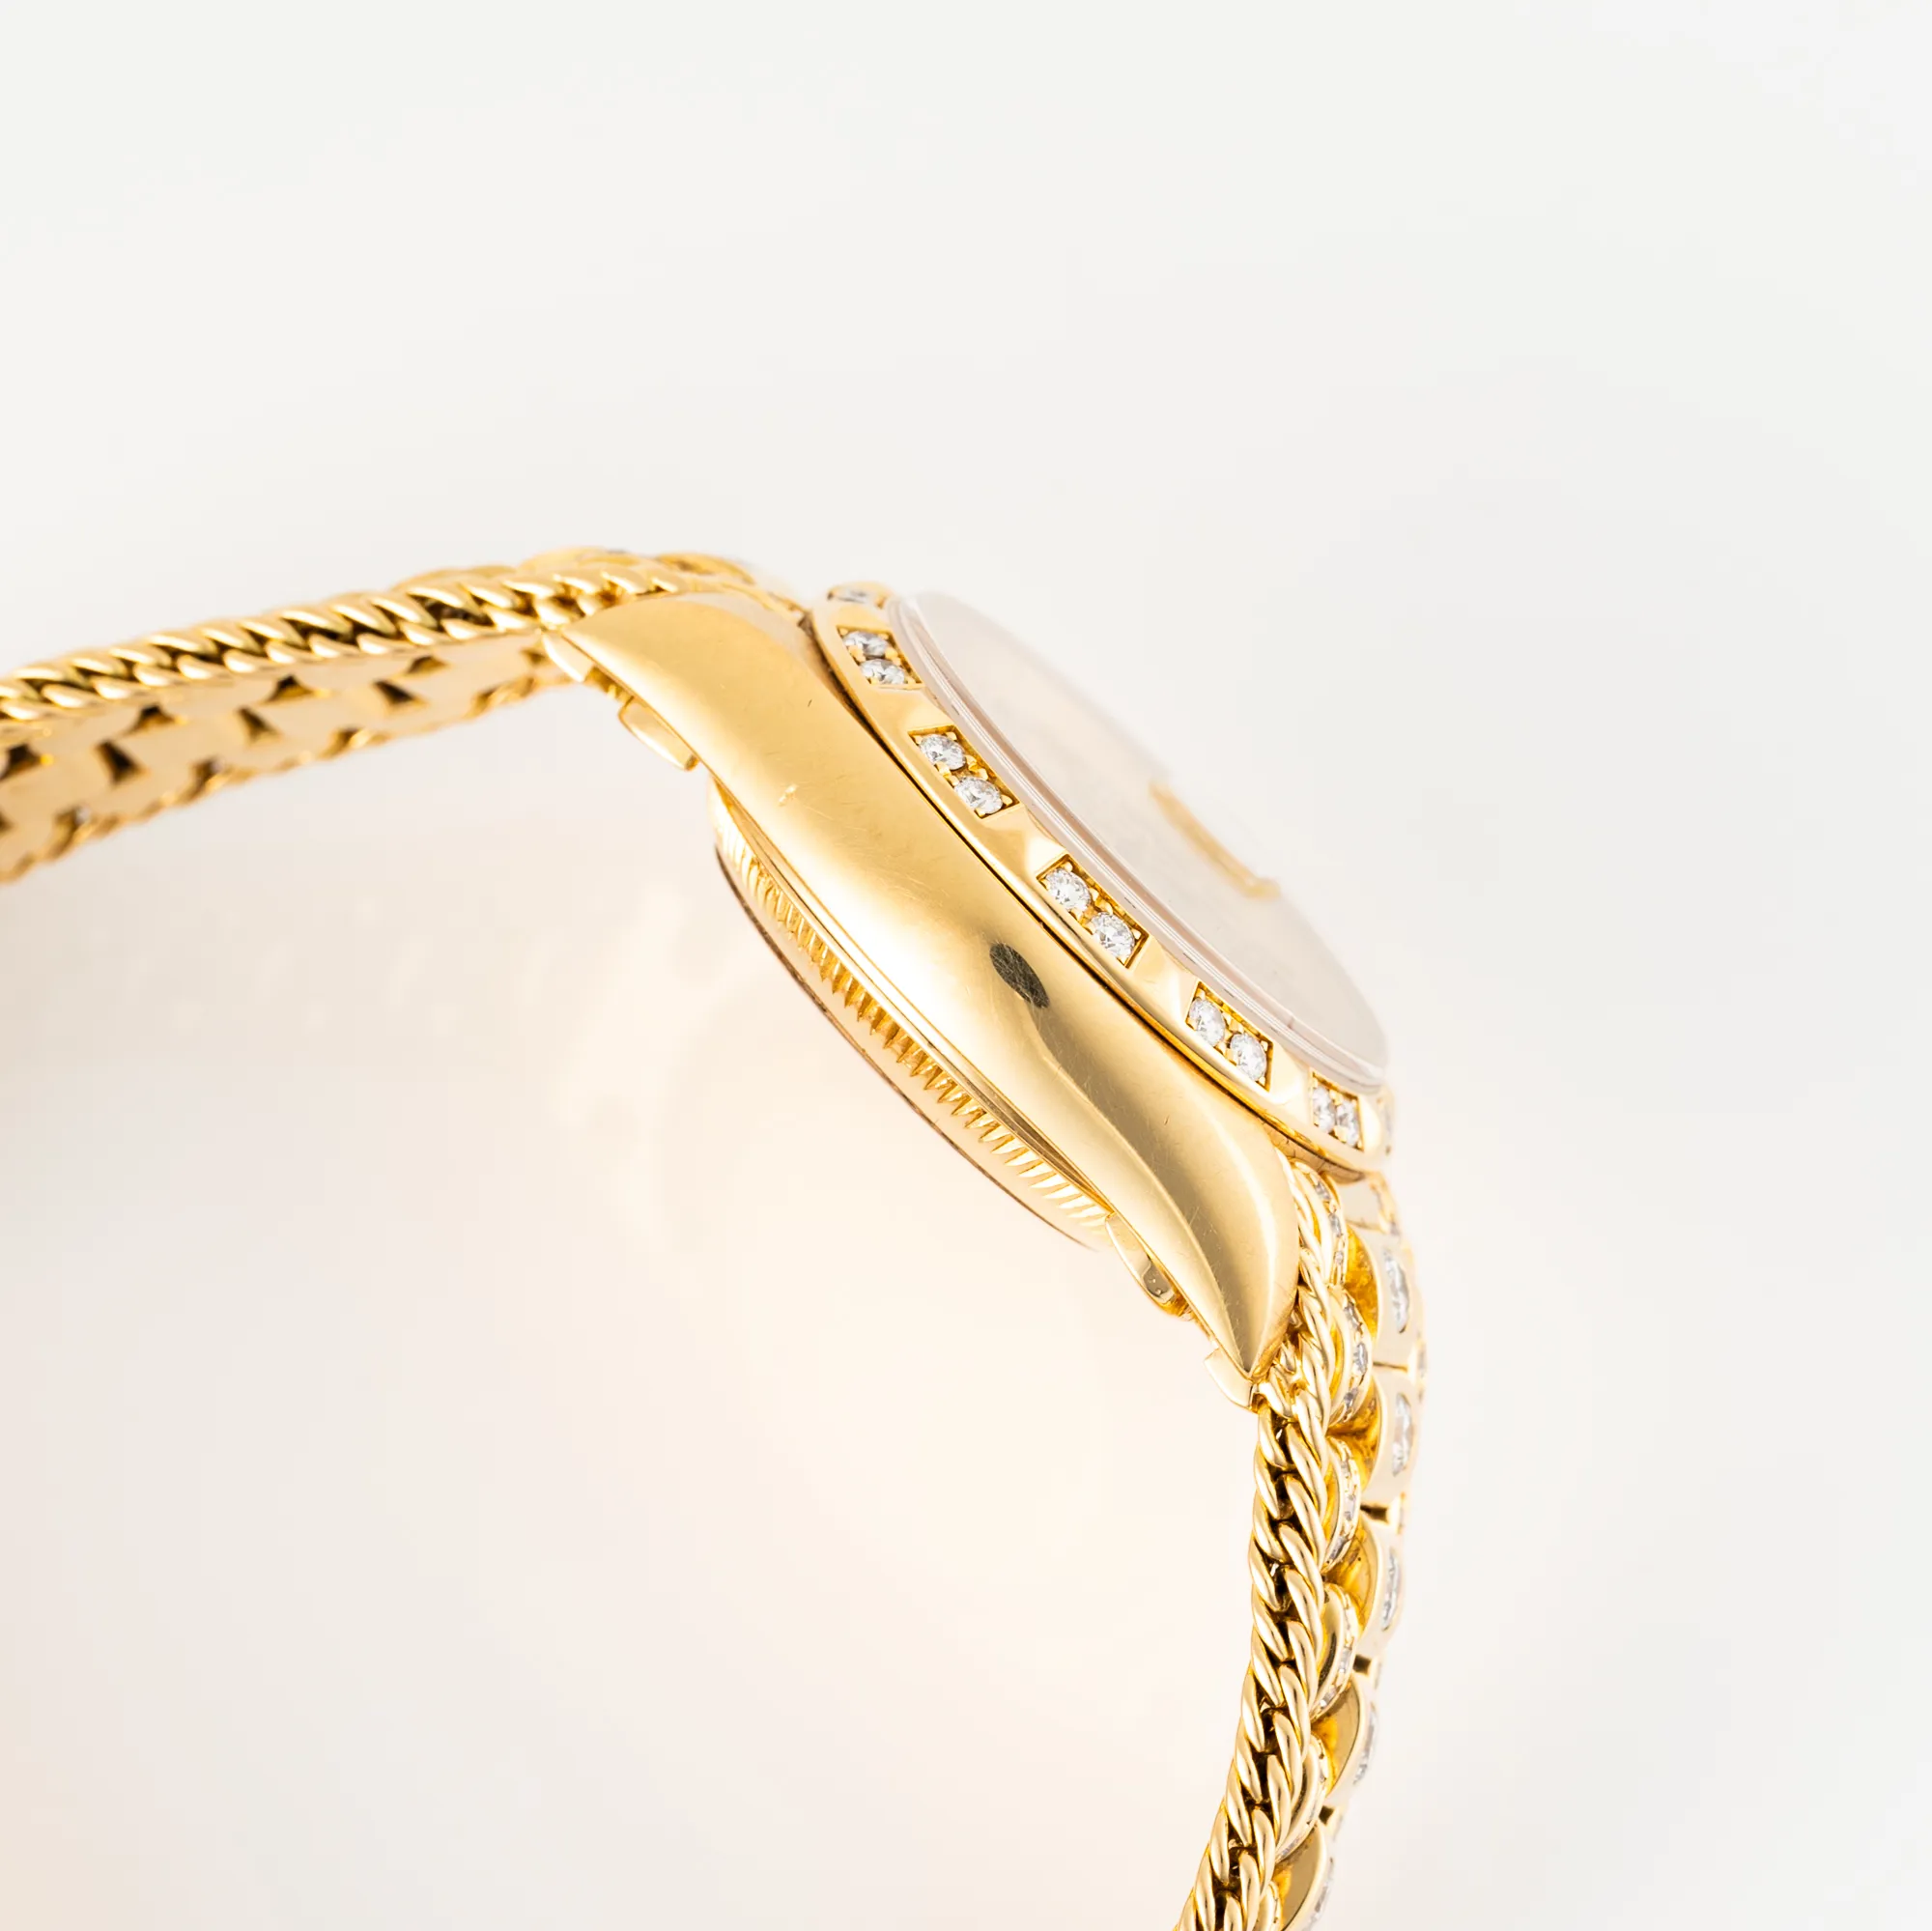 Rolex Lady-Datejust 69258 26mm Gold and diamond-set Champagne 5